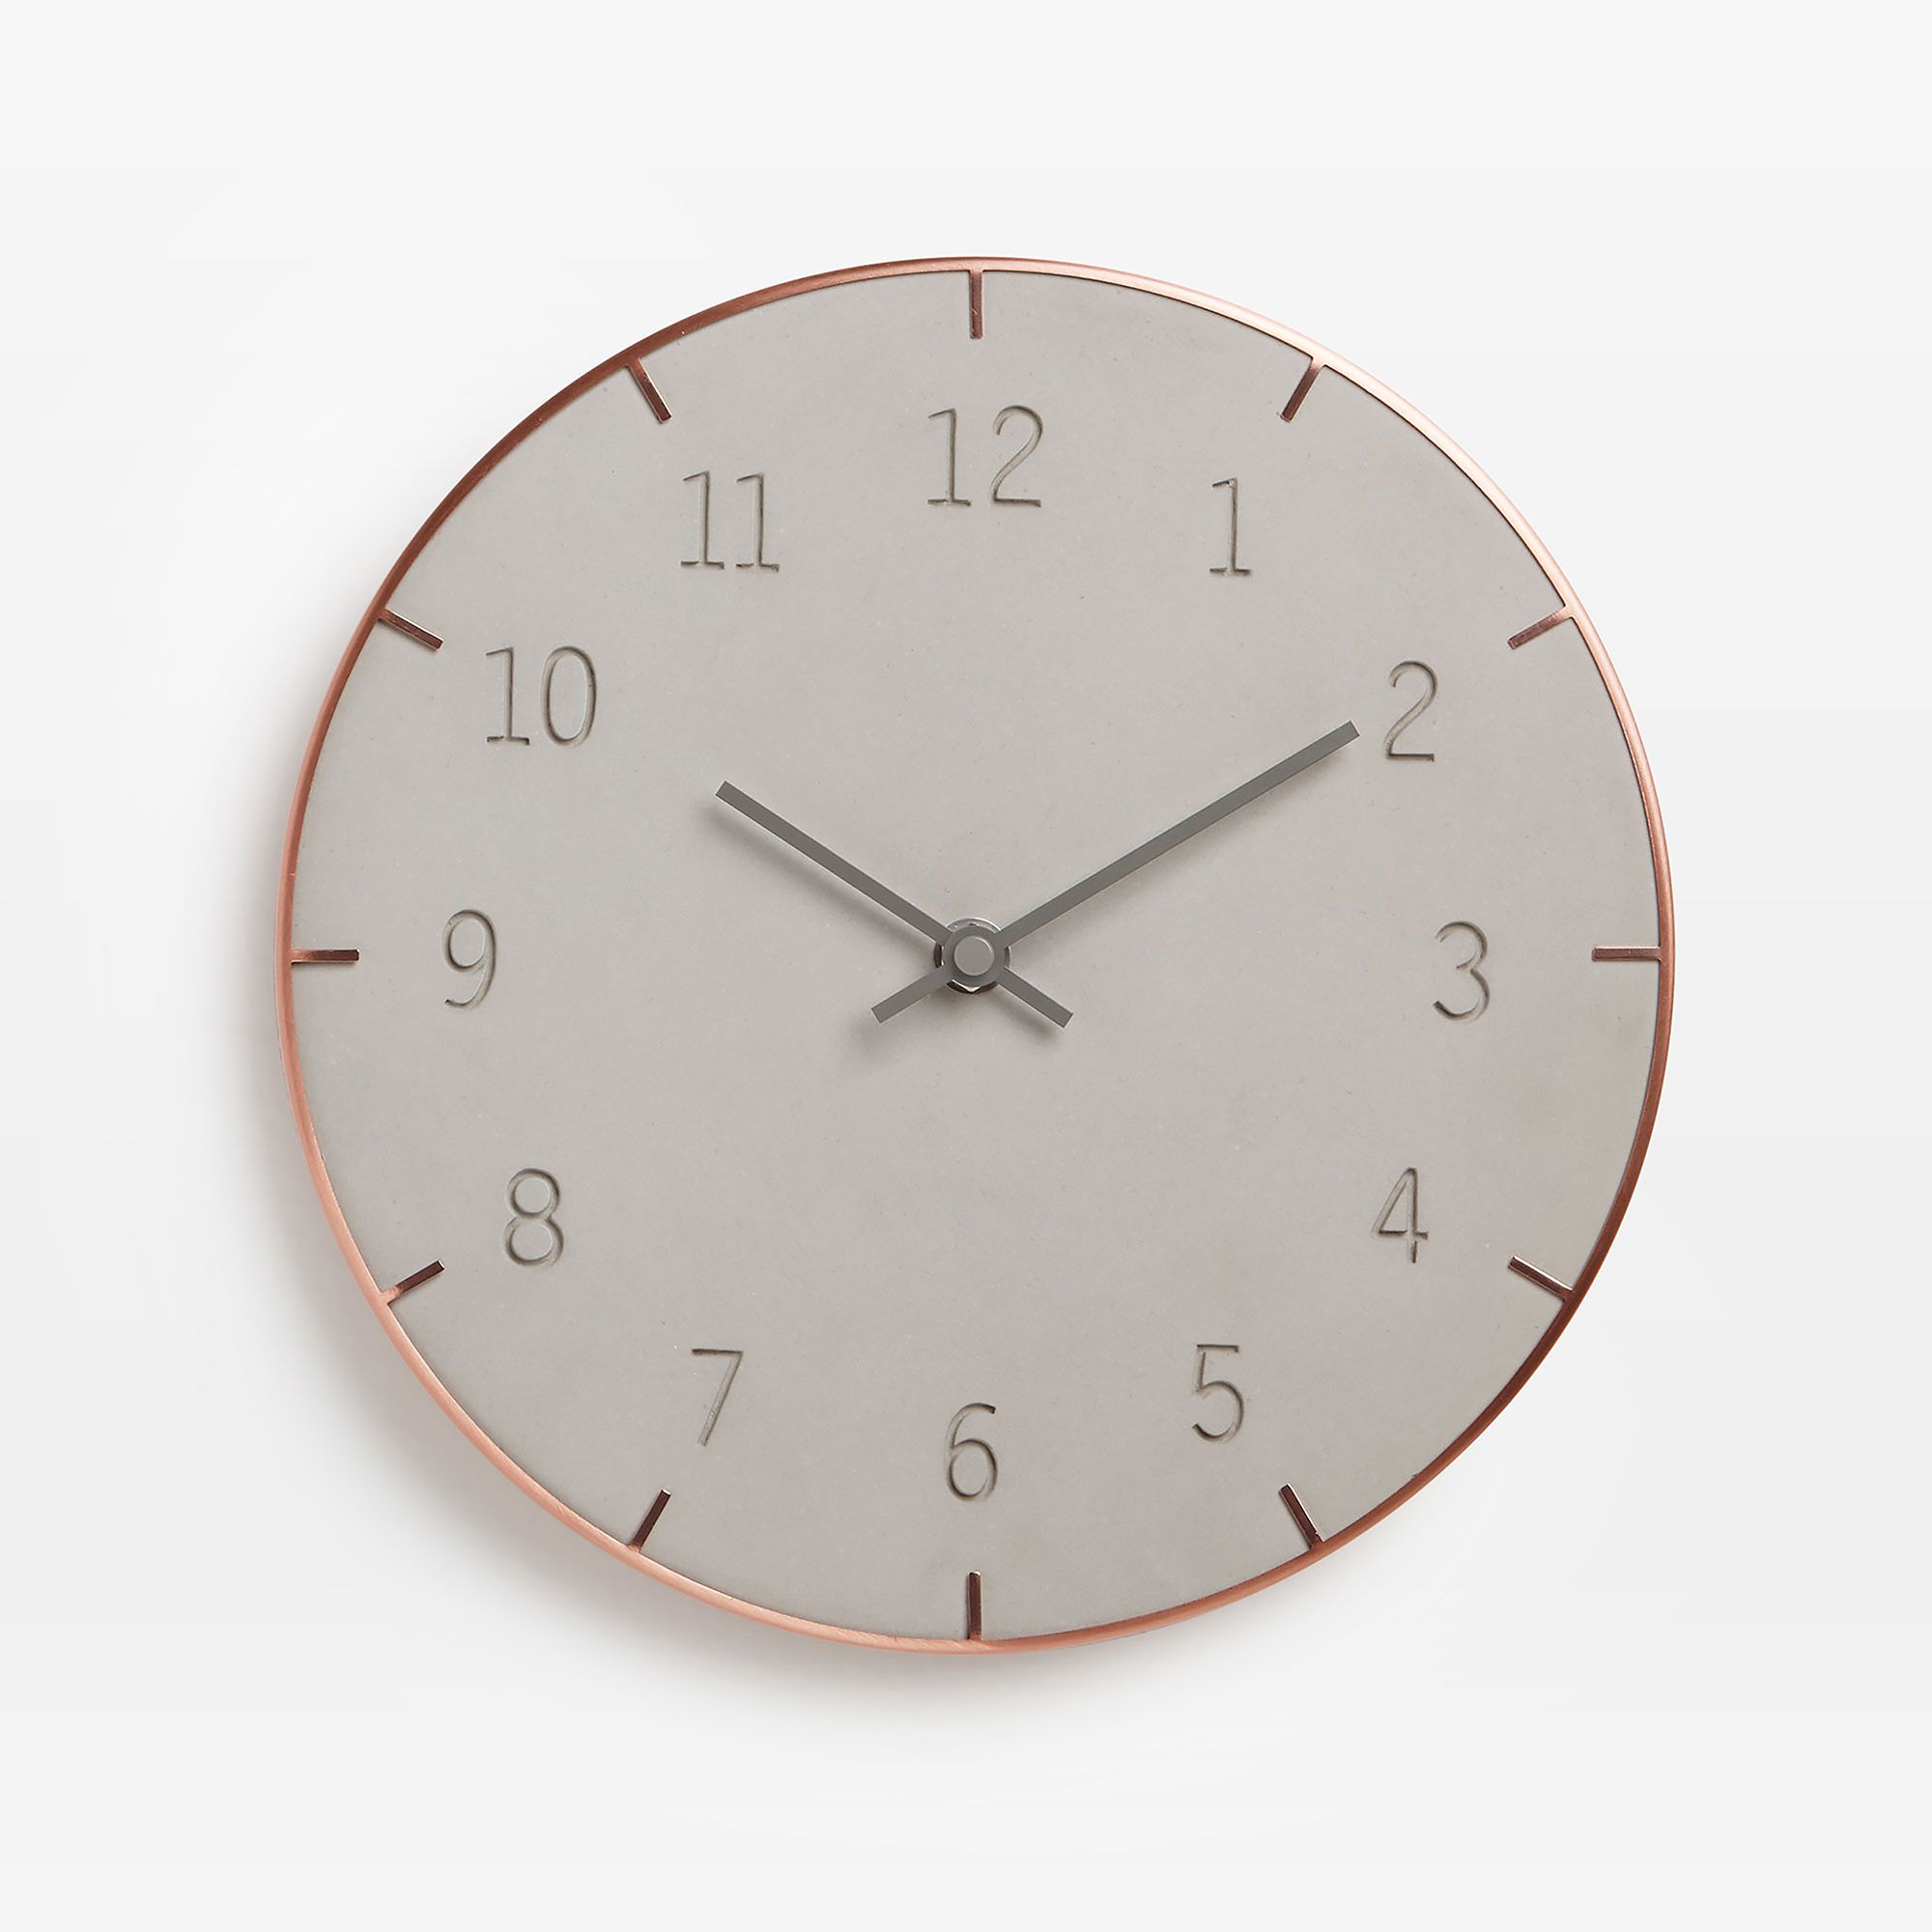 15 Best Kitchen Wall Clocks - Stylish Clock Ideas for Kitchens